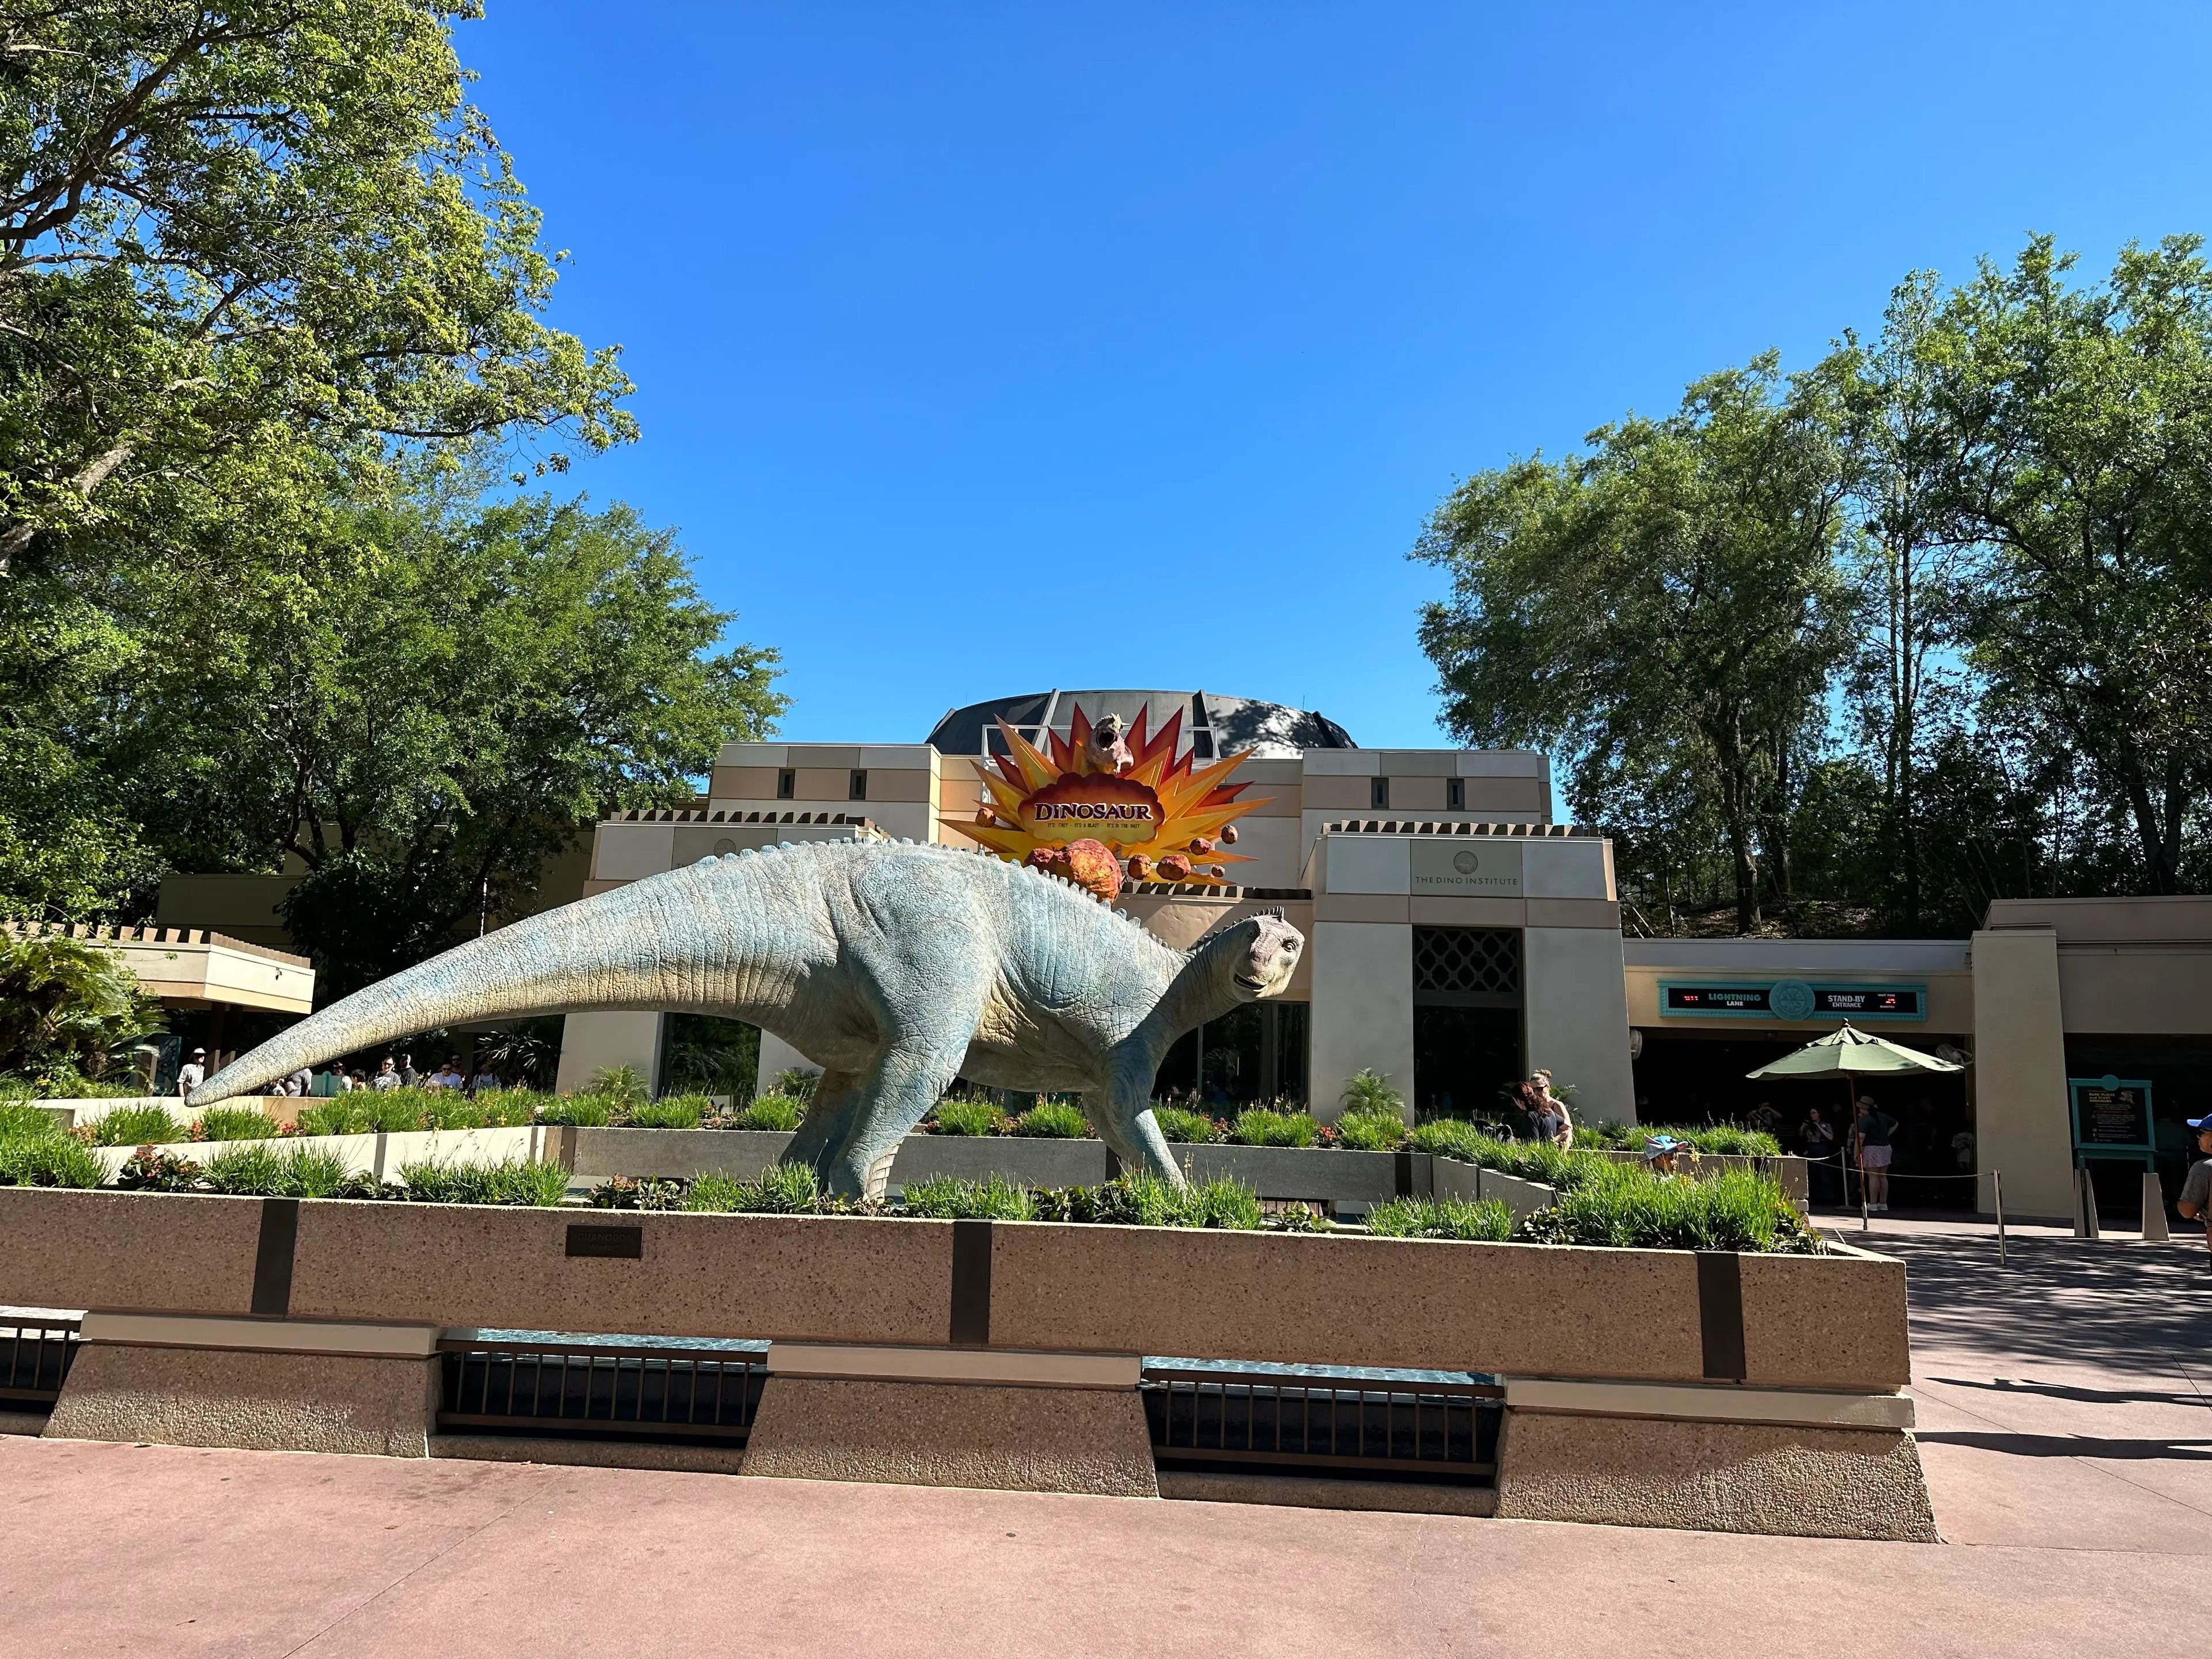 Dinosaur exhibit at Disney.